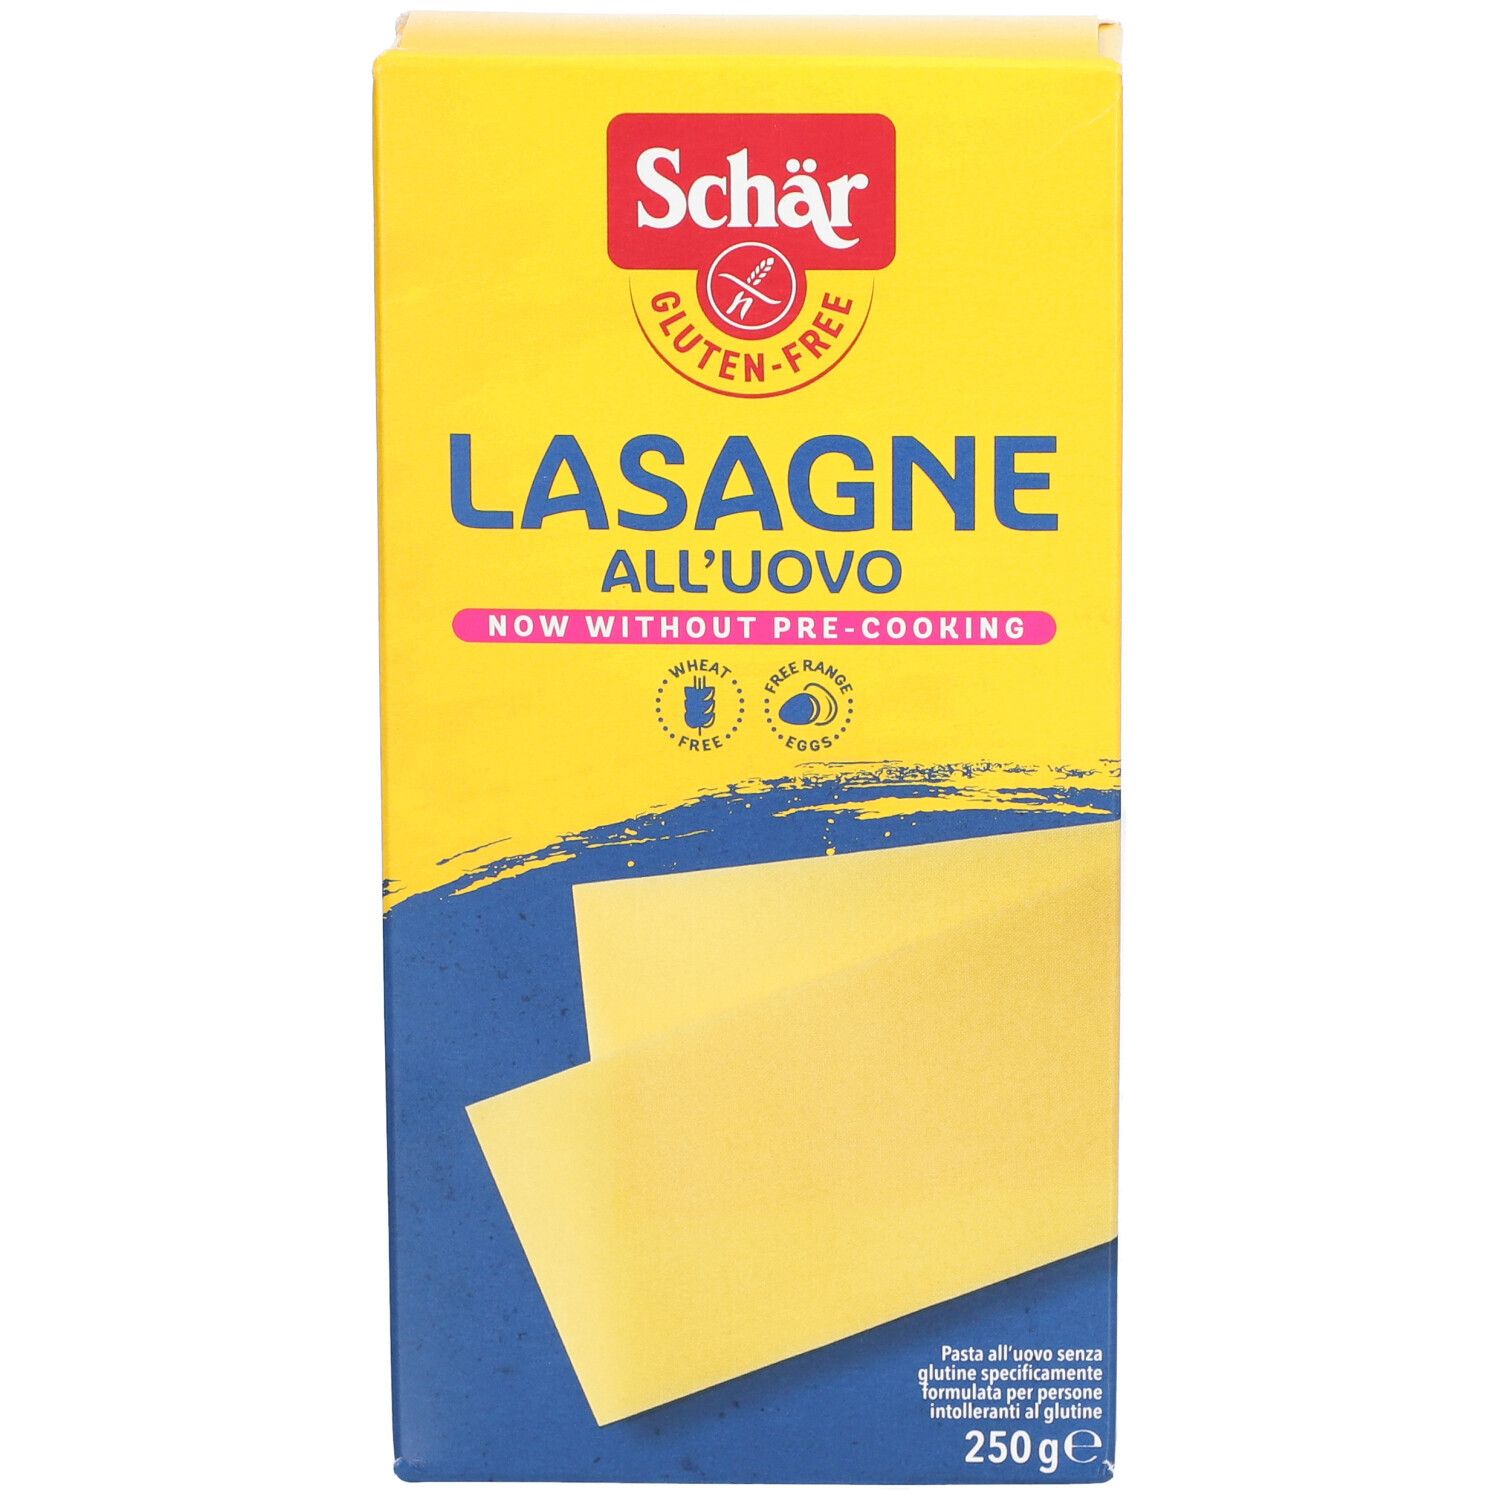 Schär Lasagne All'Uovo